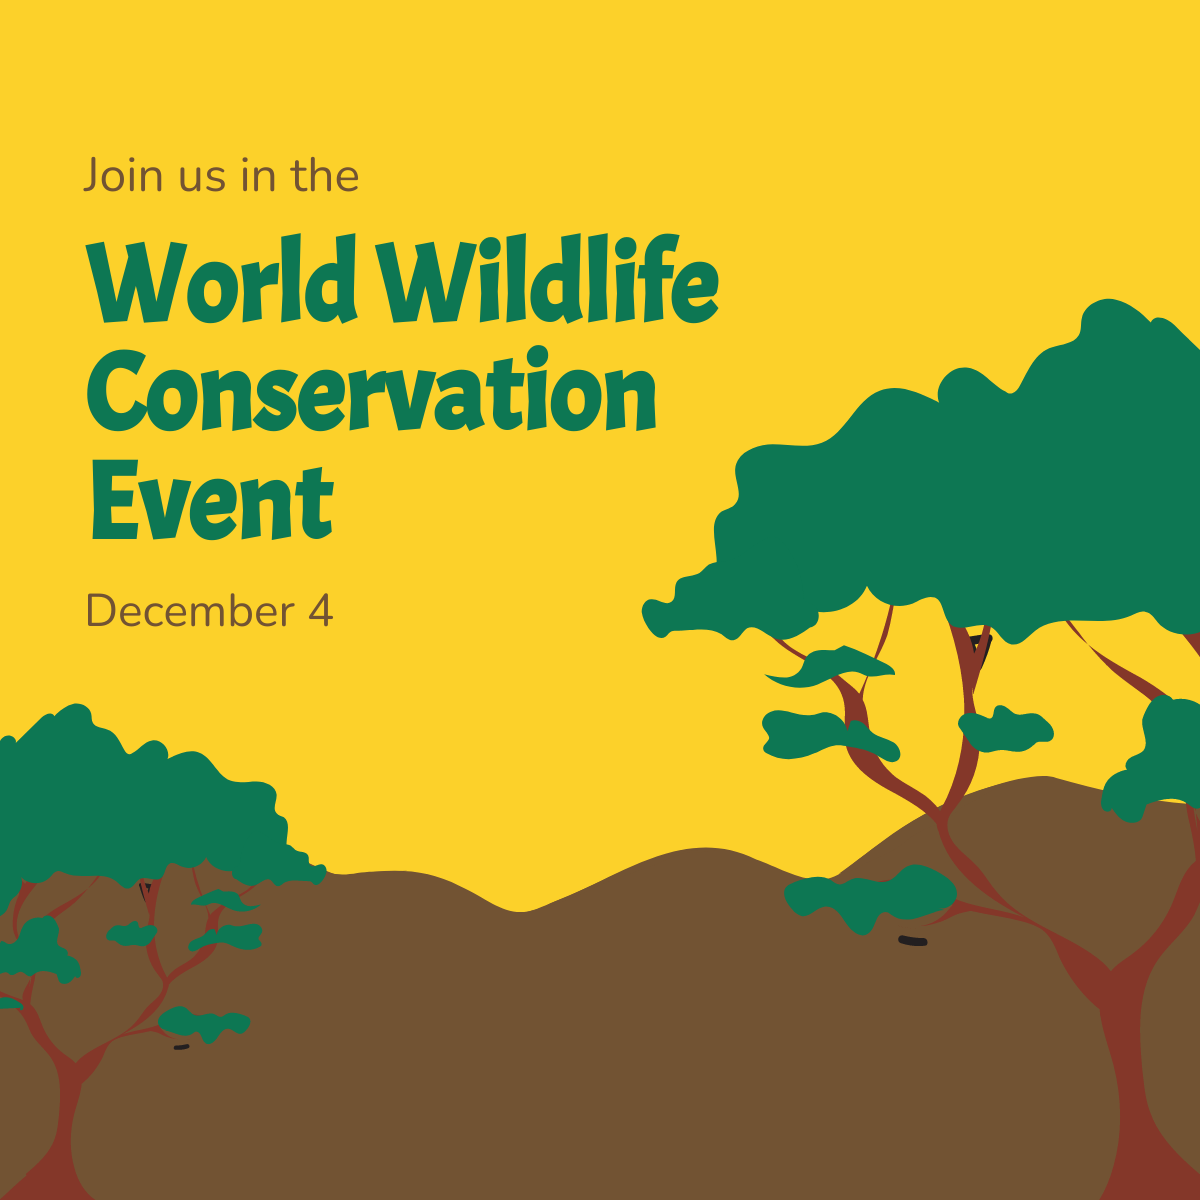 World Wildlife Conservation Event Linkedin Post Template